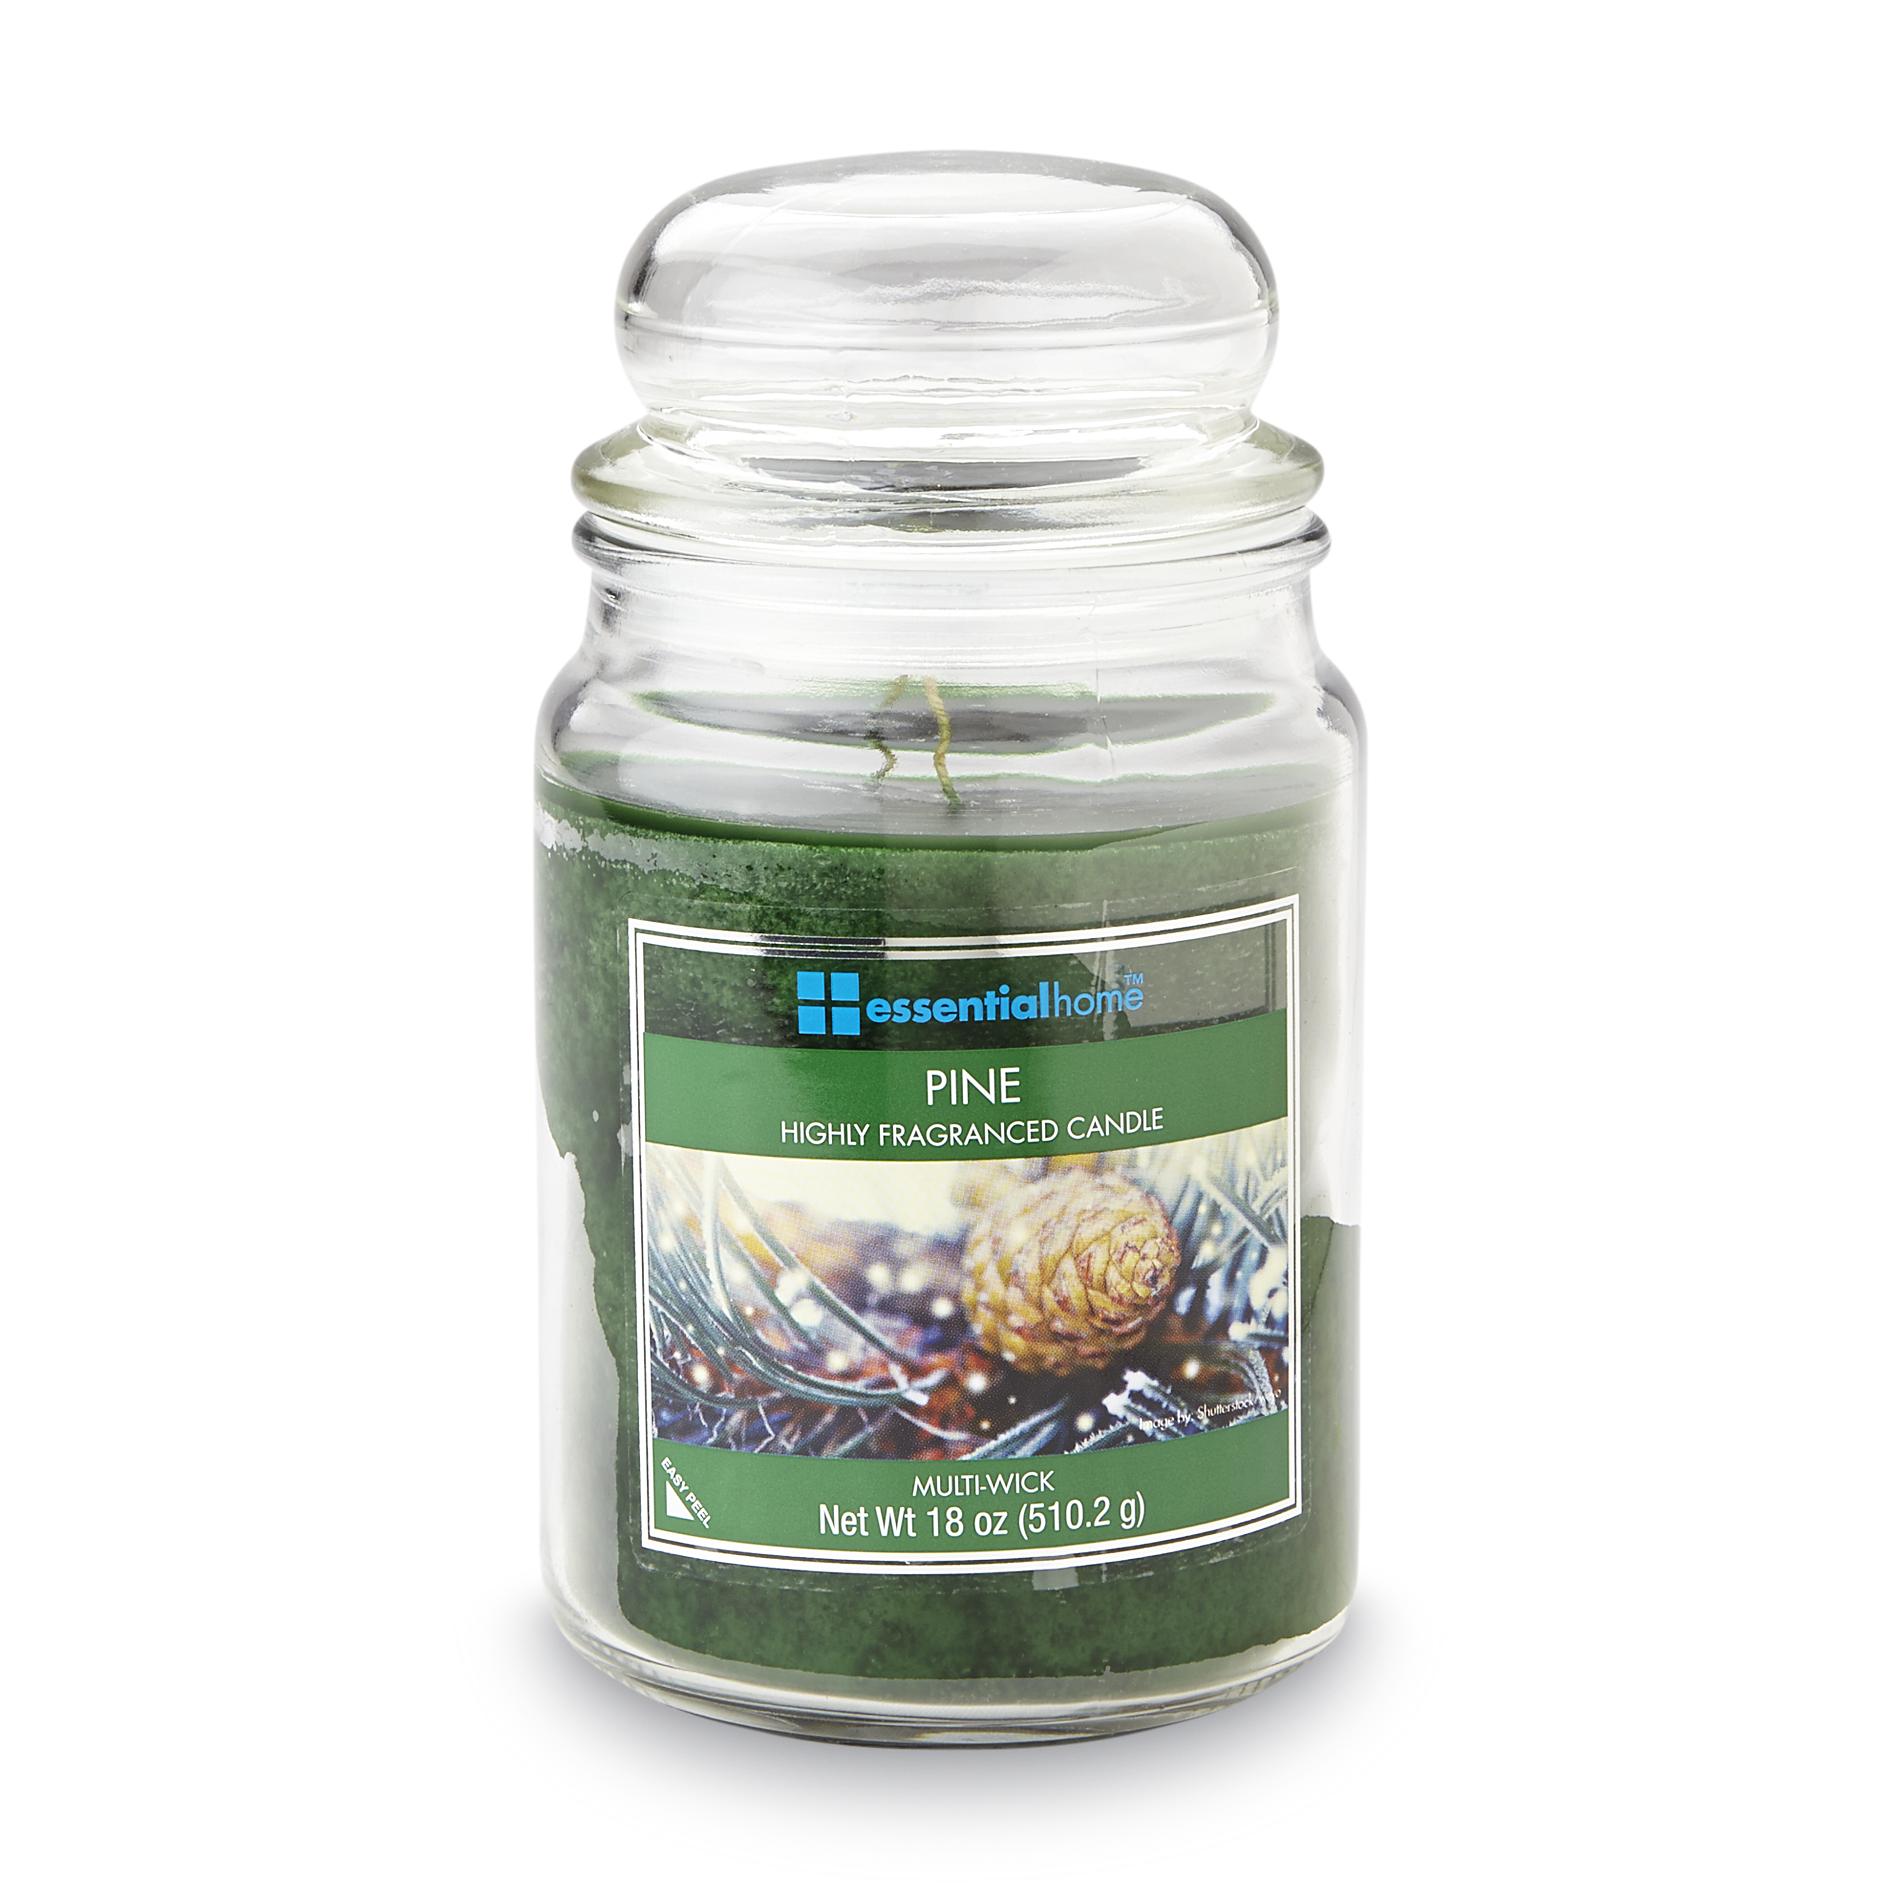 Essential Home Lidded Christmas Jar Candle - Pine